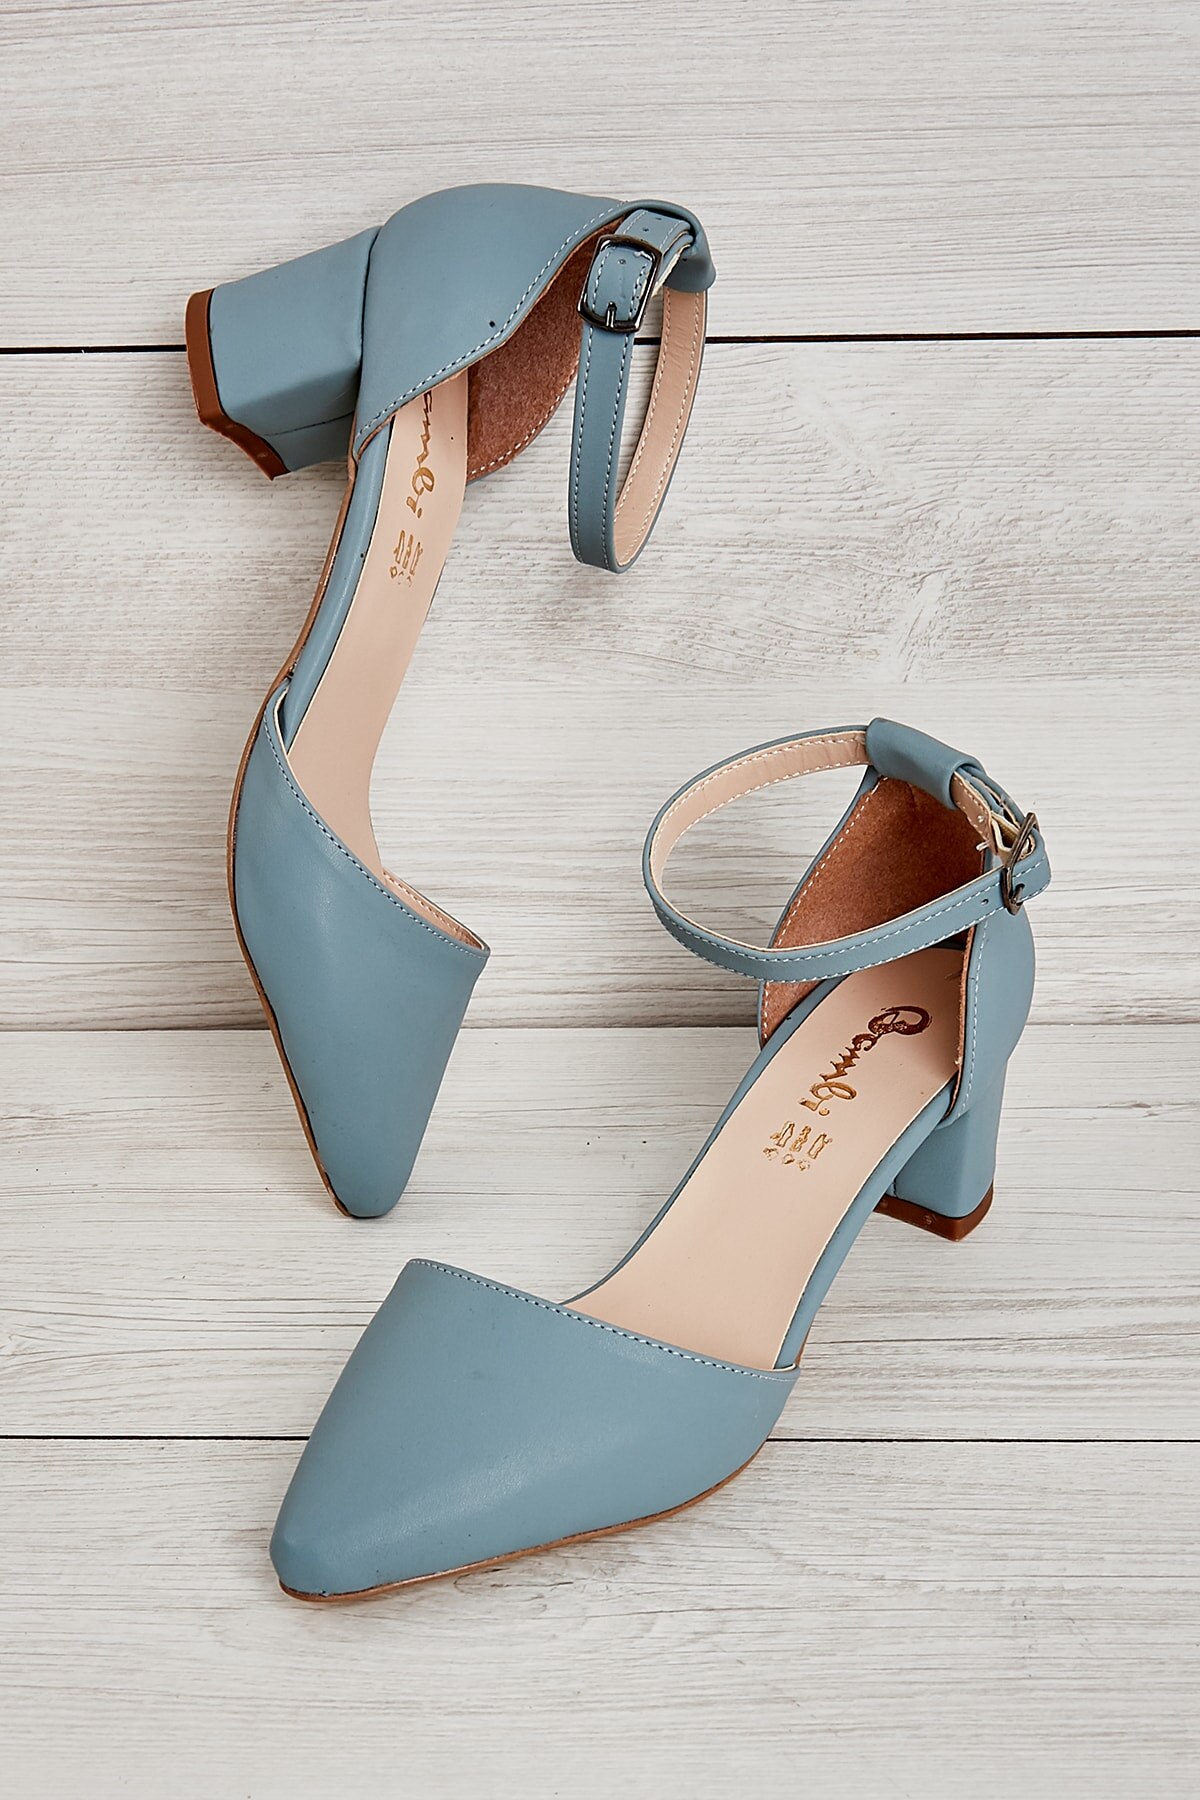 Alarga Blue Nubuck Women 'S Classic High-Heeled Shoes K01503720071 L05037200